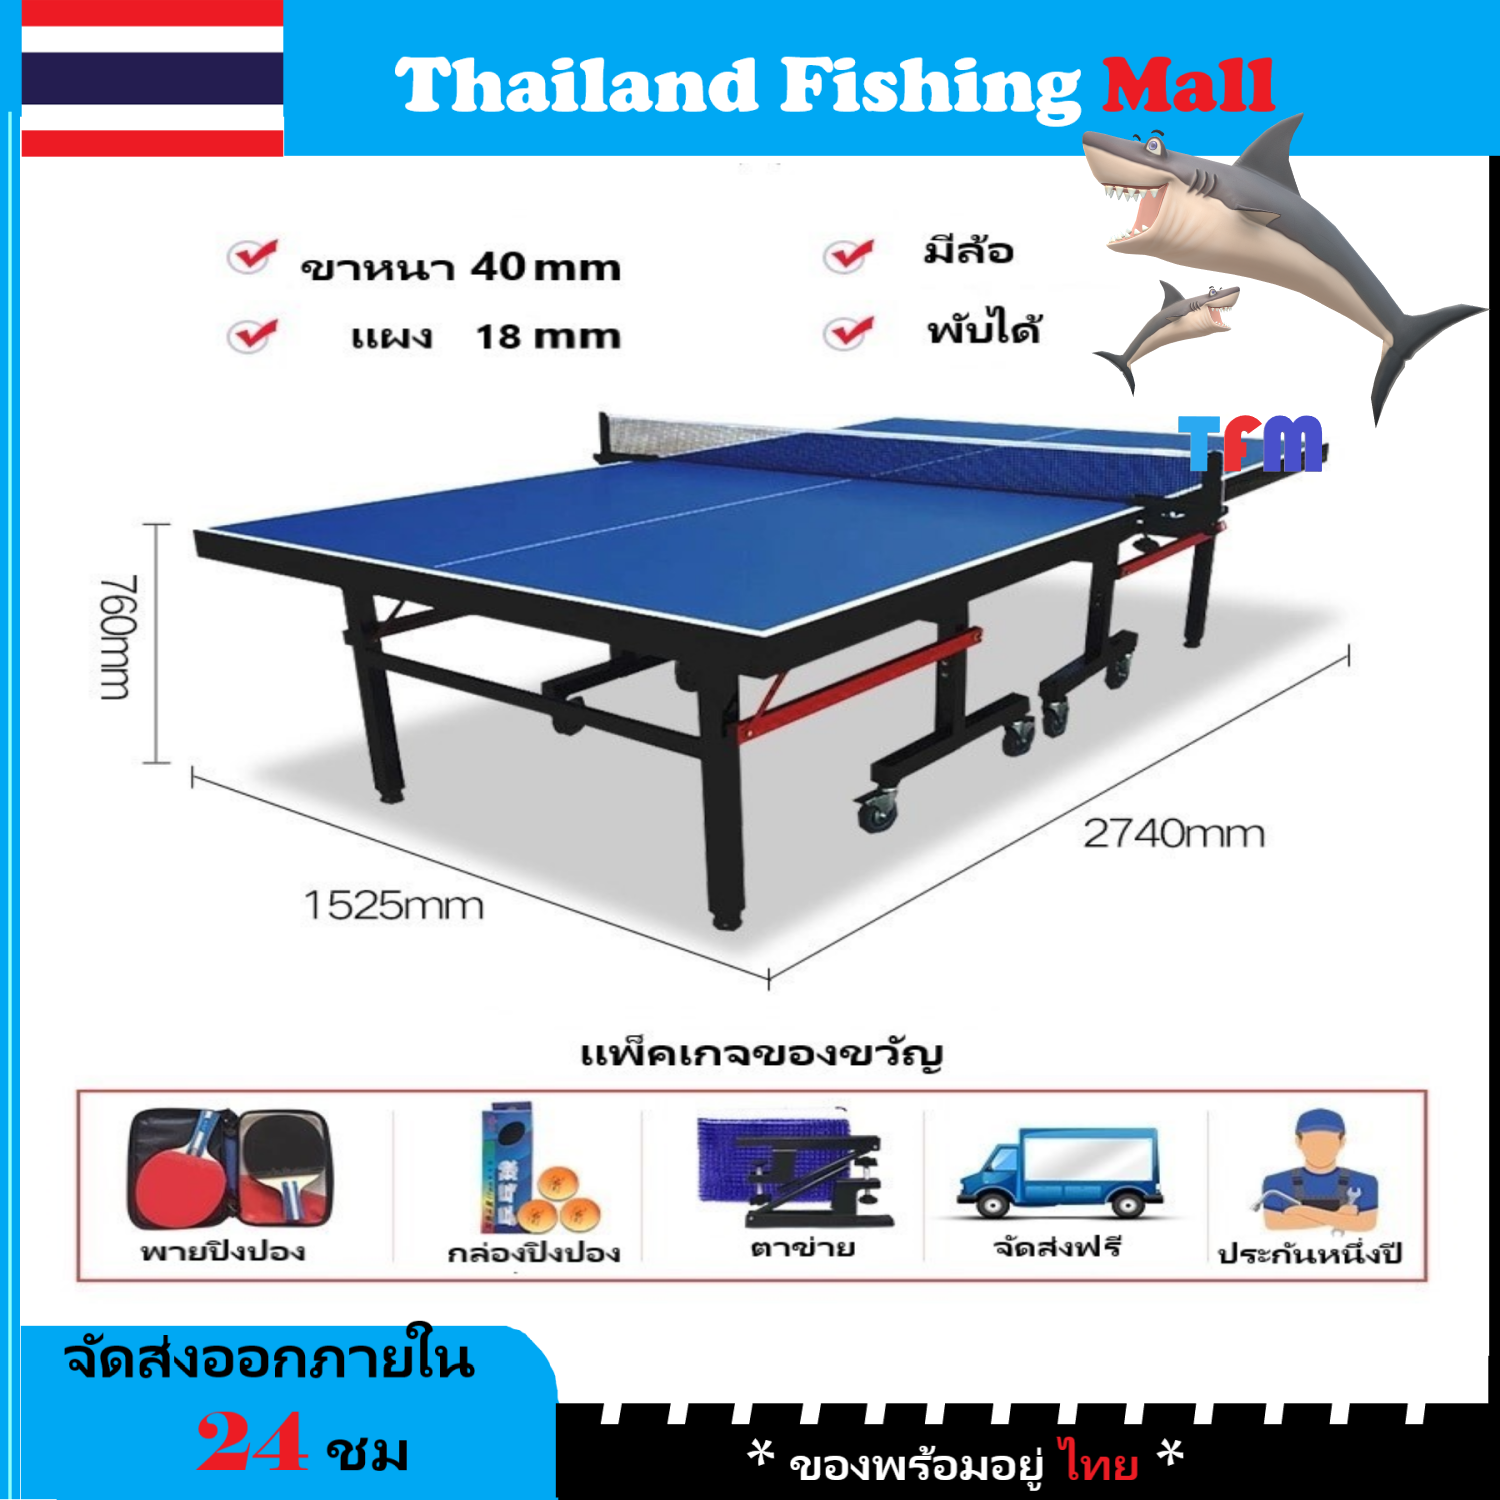 Free Shipping  โต๊ะปิงปอง Table Tennis แถมฟรี!!! เน็ท + ไม้ปิงปอง + ลูกปิงปอง,โต๊ะปิงปองมาตรฐานแข่งขัน ขนาด 15 & 18 มิลลิเมตร Ping Pong ปิงปอง